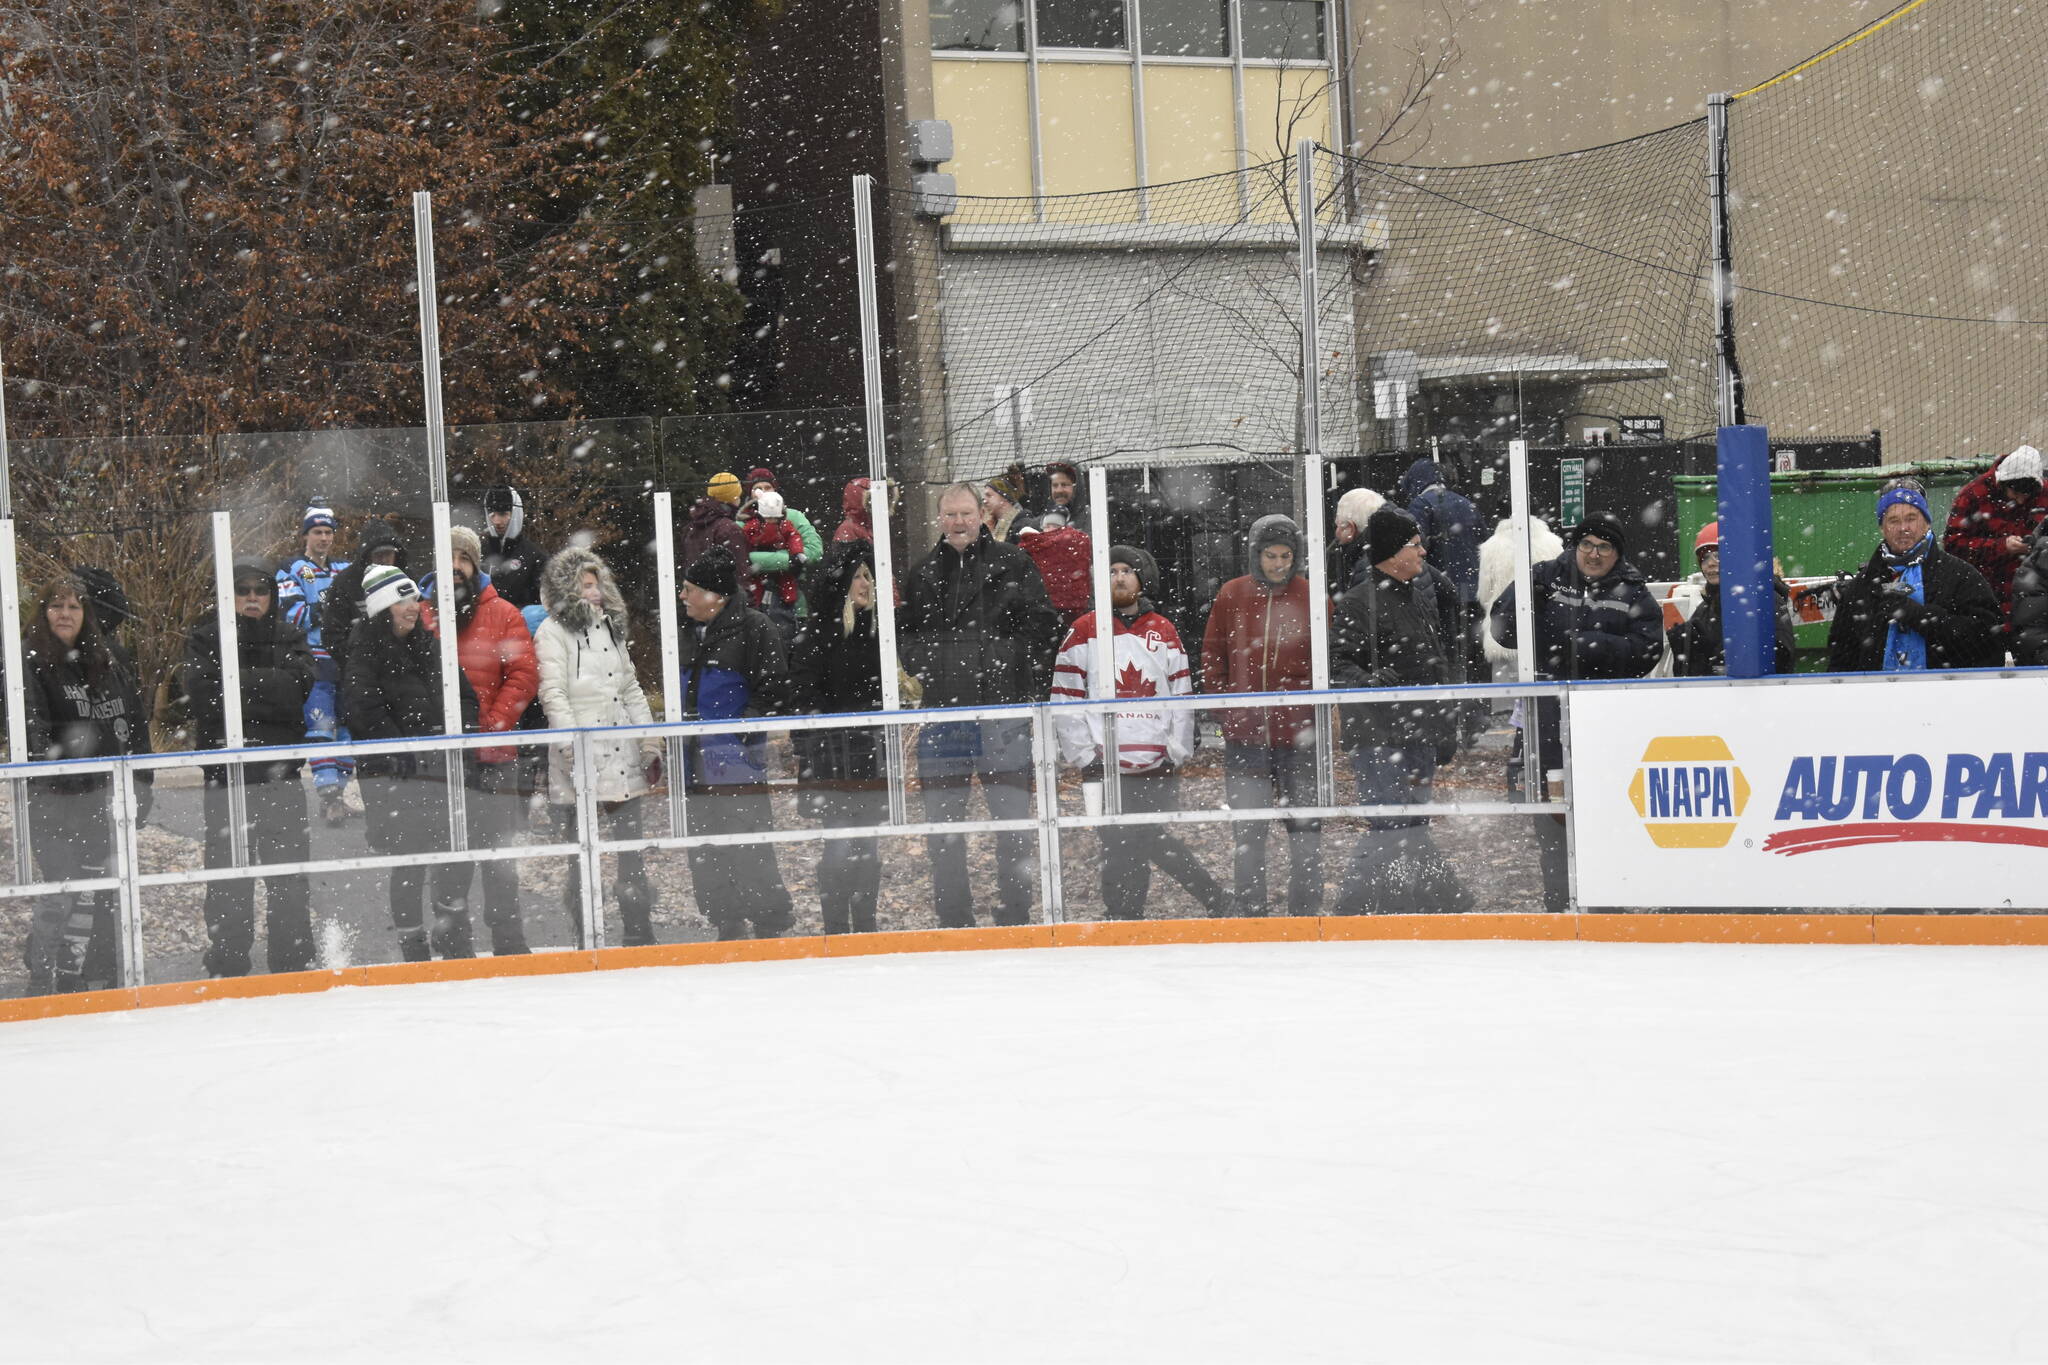 Snow began to fall in Penticton midway through the alumni game. (Logan Lockhart- Western News)